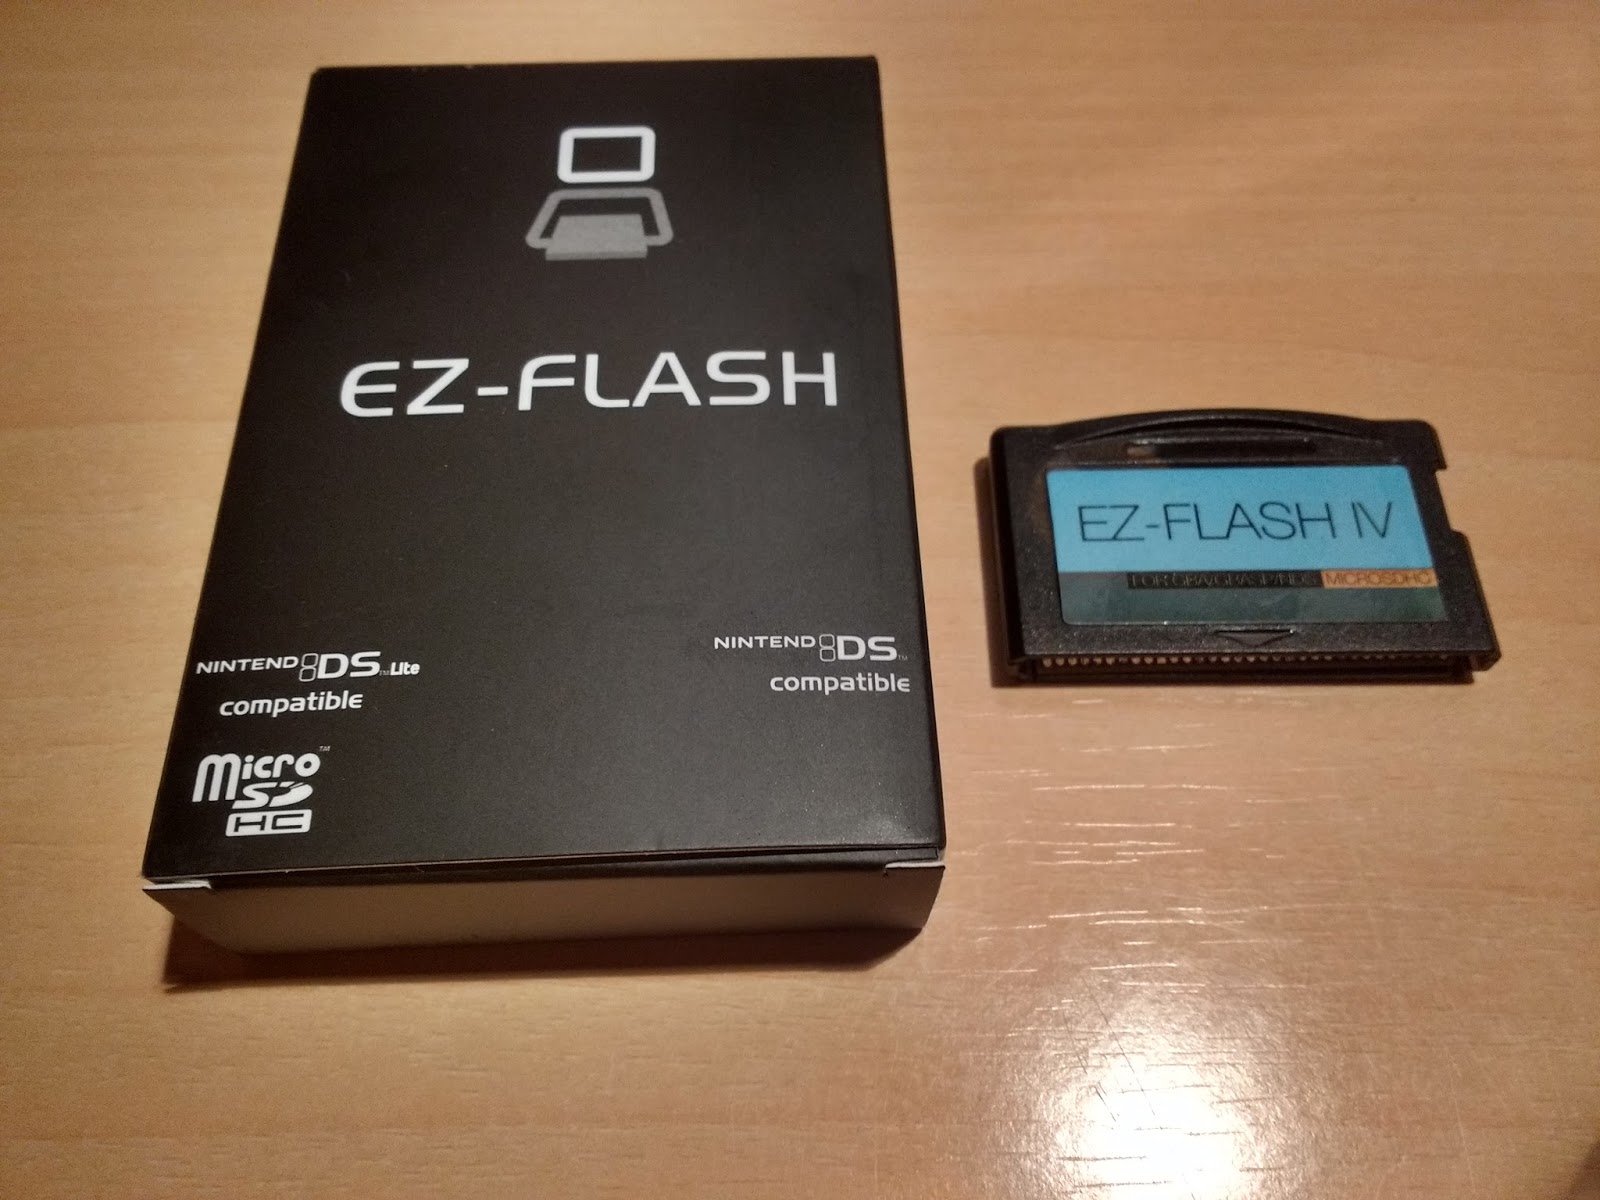 Pro flash 4pda. Ez Flash v. SD GBA радиаторы отопления. Ez-Flash Parallel. Vdo MSM1.4 Flash.